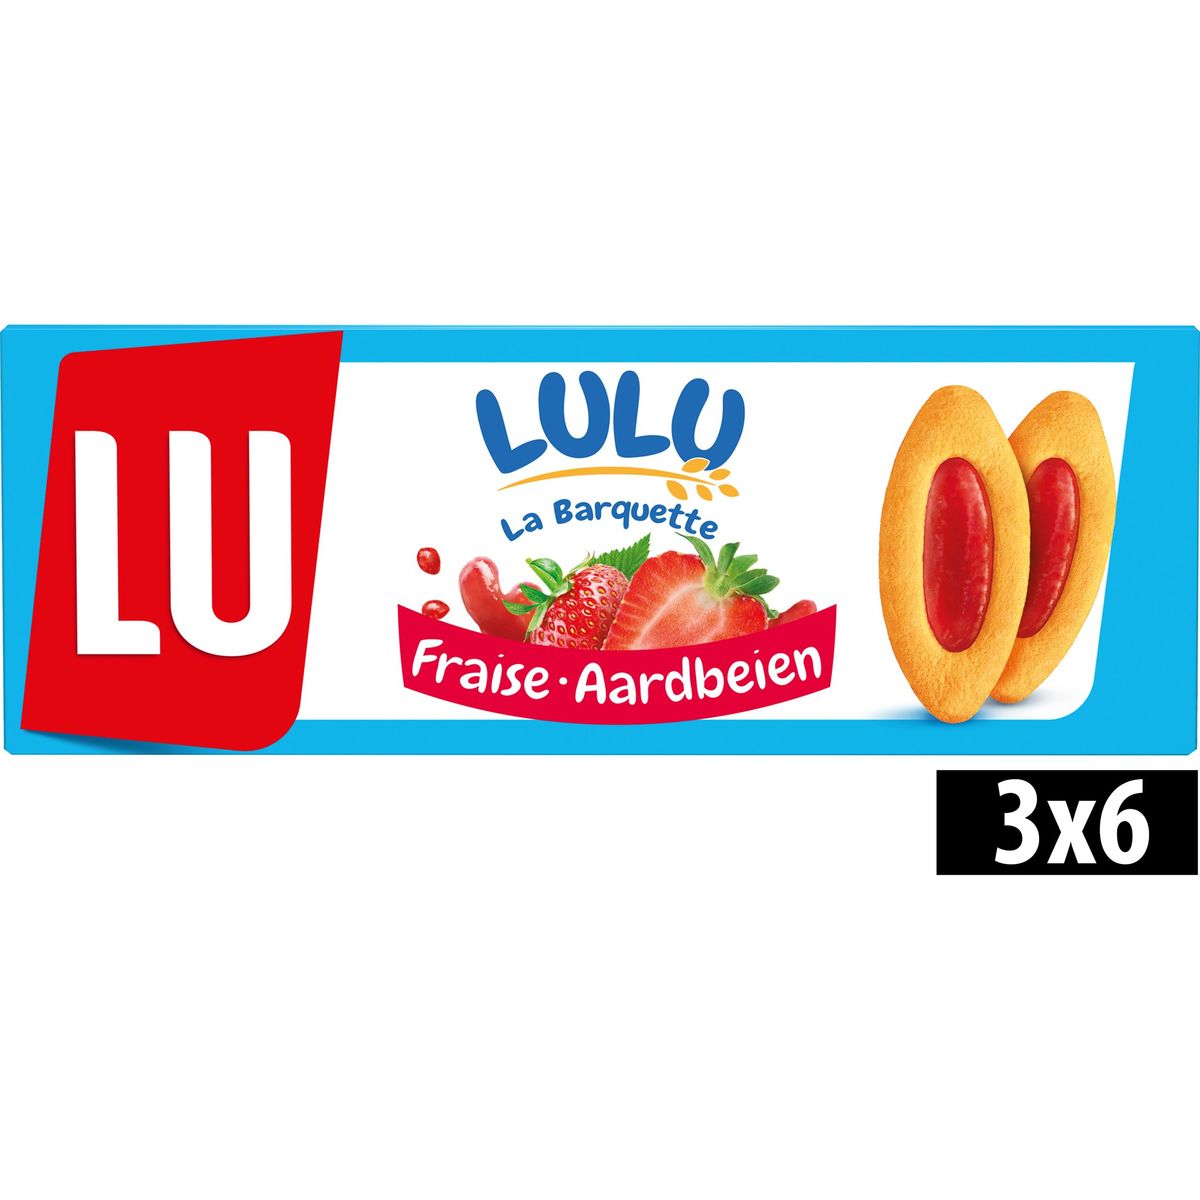 Lu Lulu Barquette abricot (120g) acheter à prix réduit